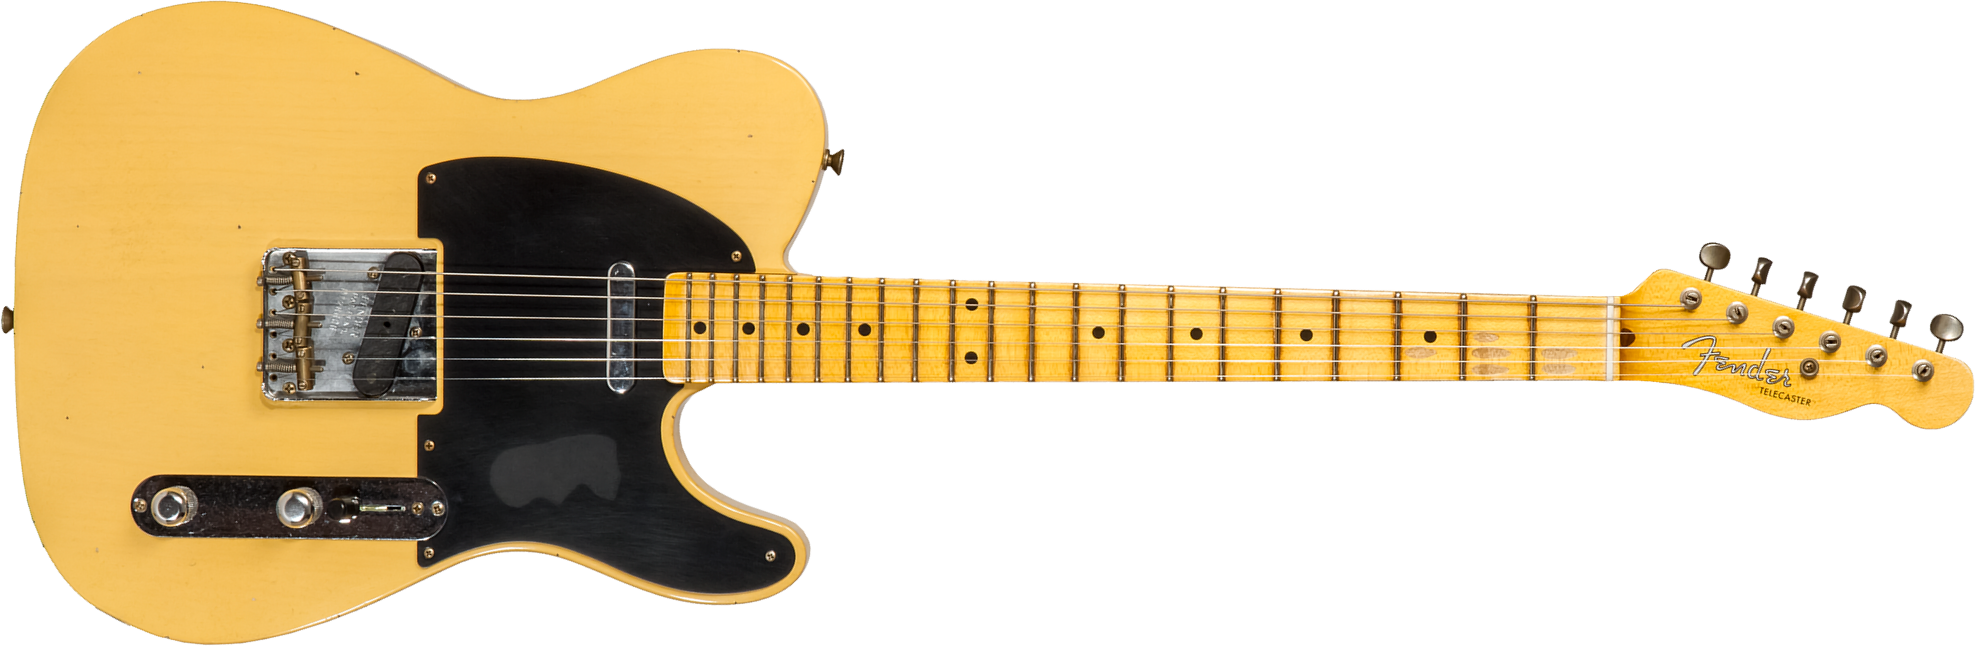 Fender Custom Shop Tele 1953 2s Ht Mn #r128606 - Journeyman Relic Aged Nocaster Blonde - Guitarra eléctrica con forma de tel - Main picture